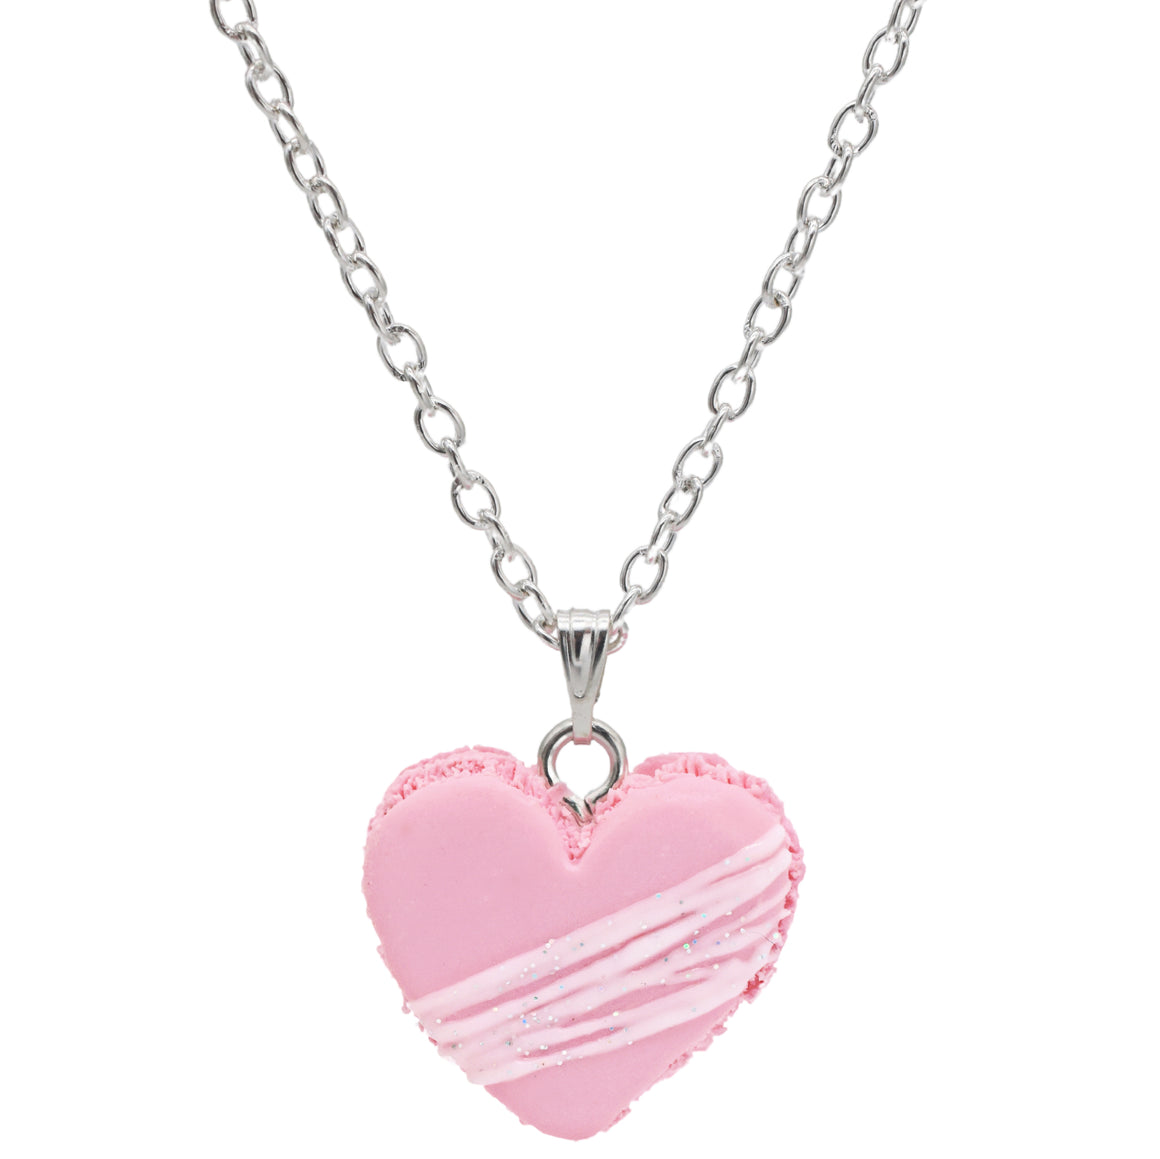 Pink Heart Macaron Charm - Glitter